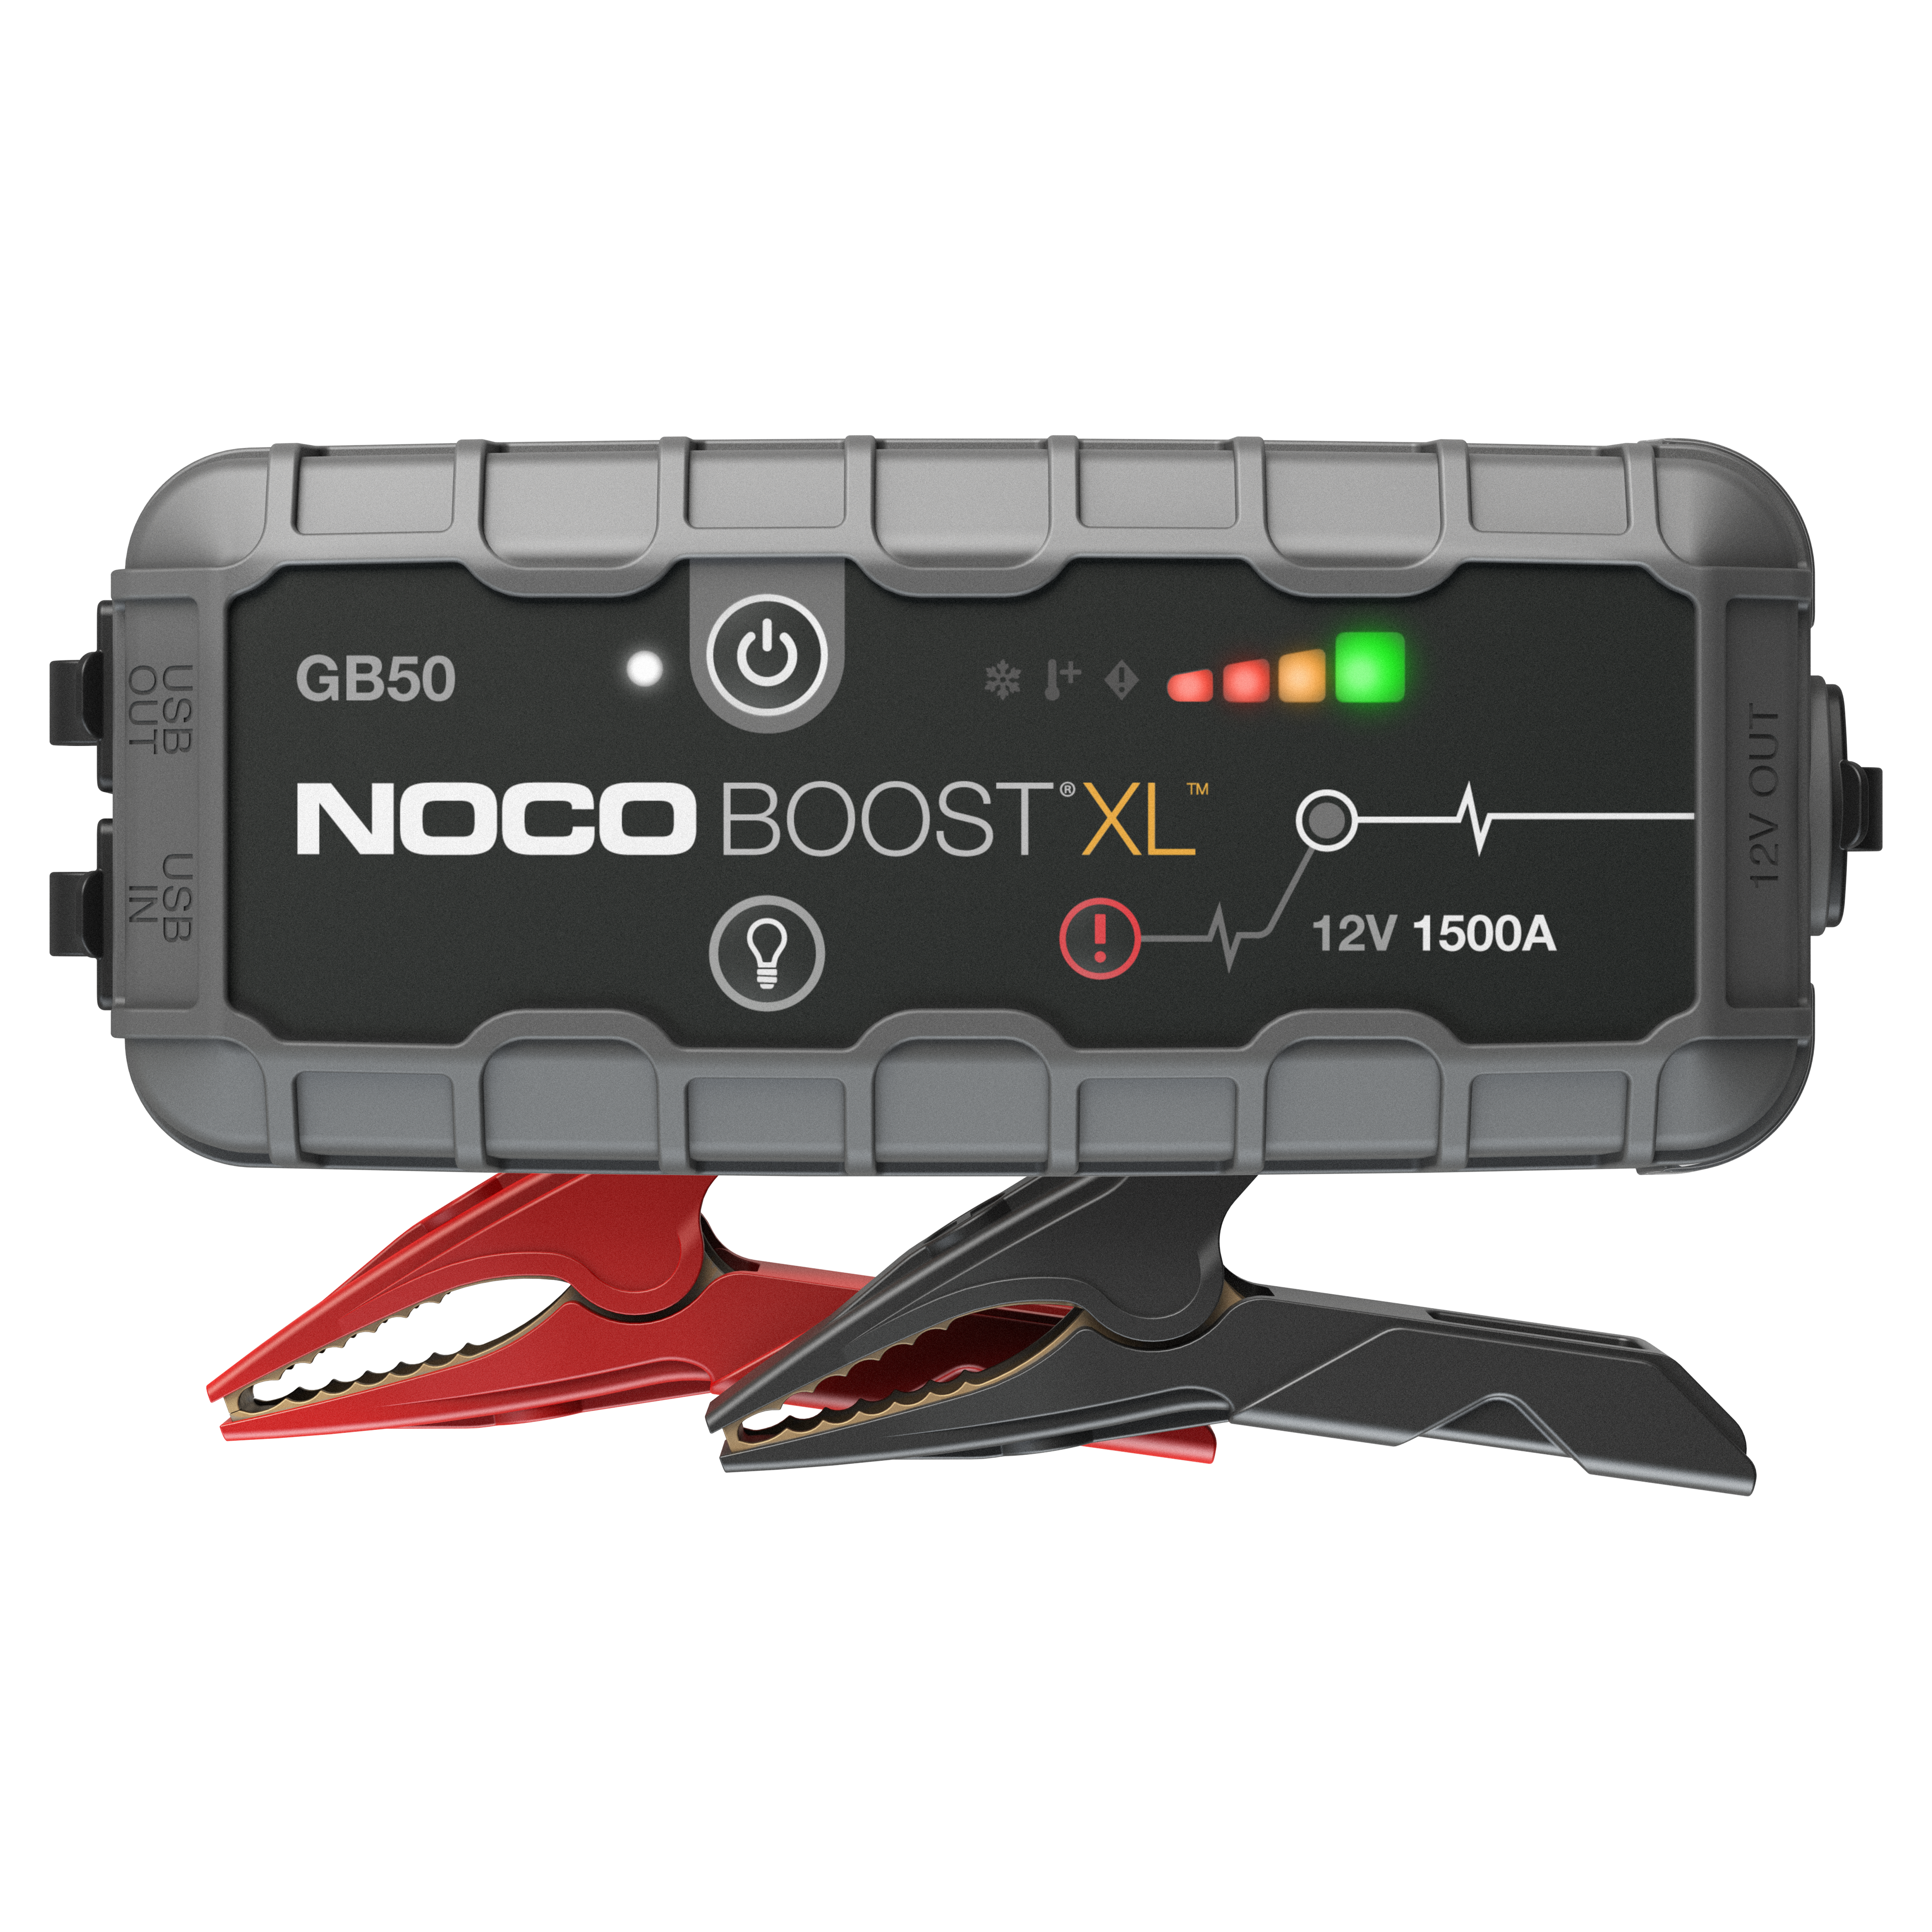 Noco Genius Boost XL GB50 booster jump starter starting aid power bank